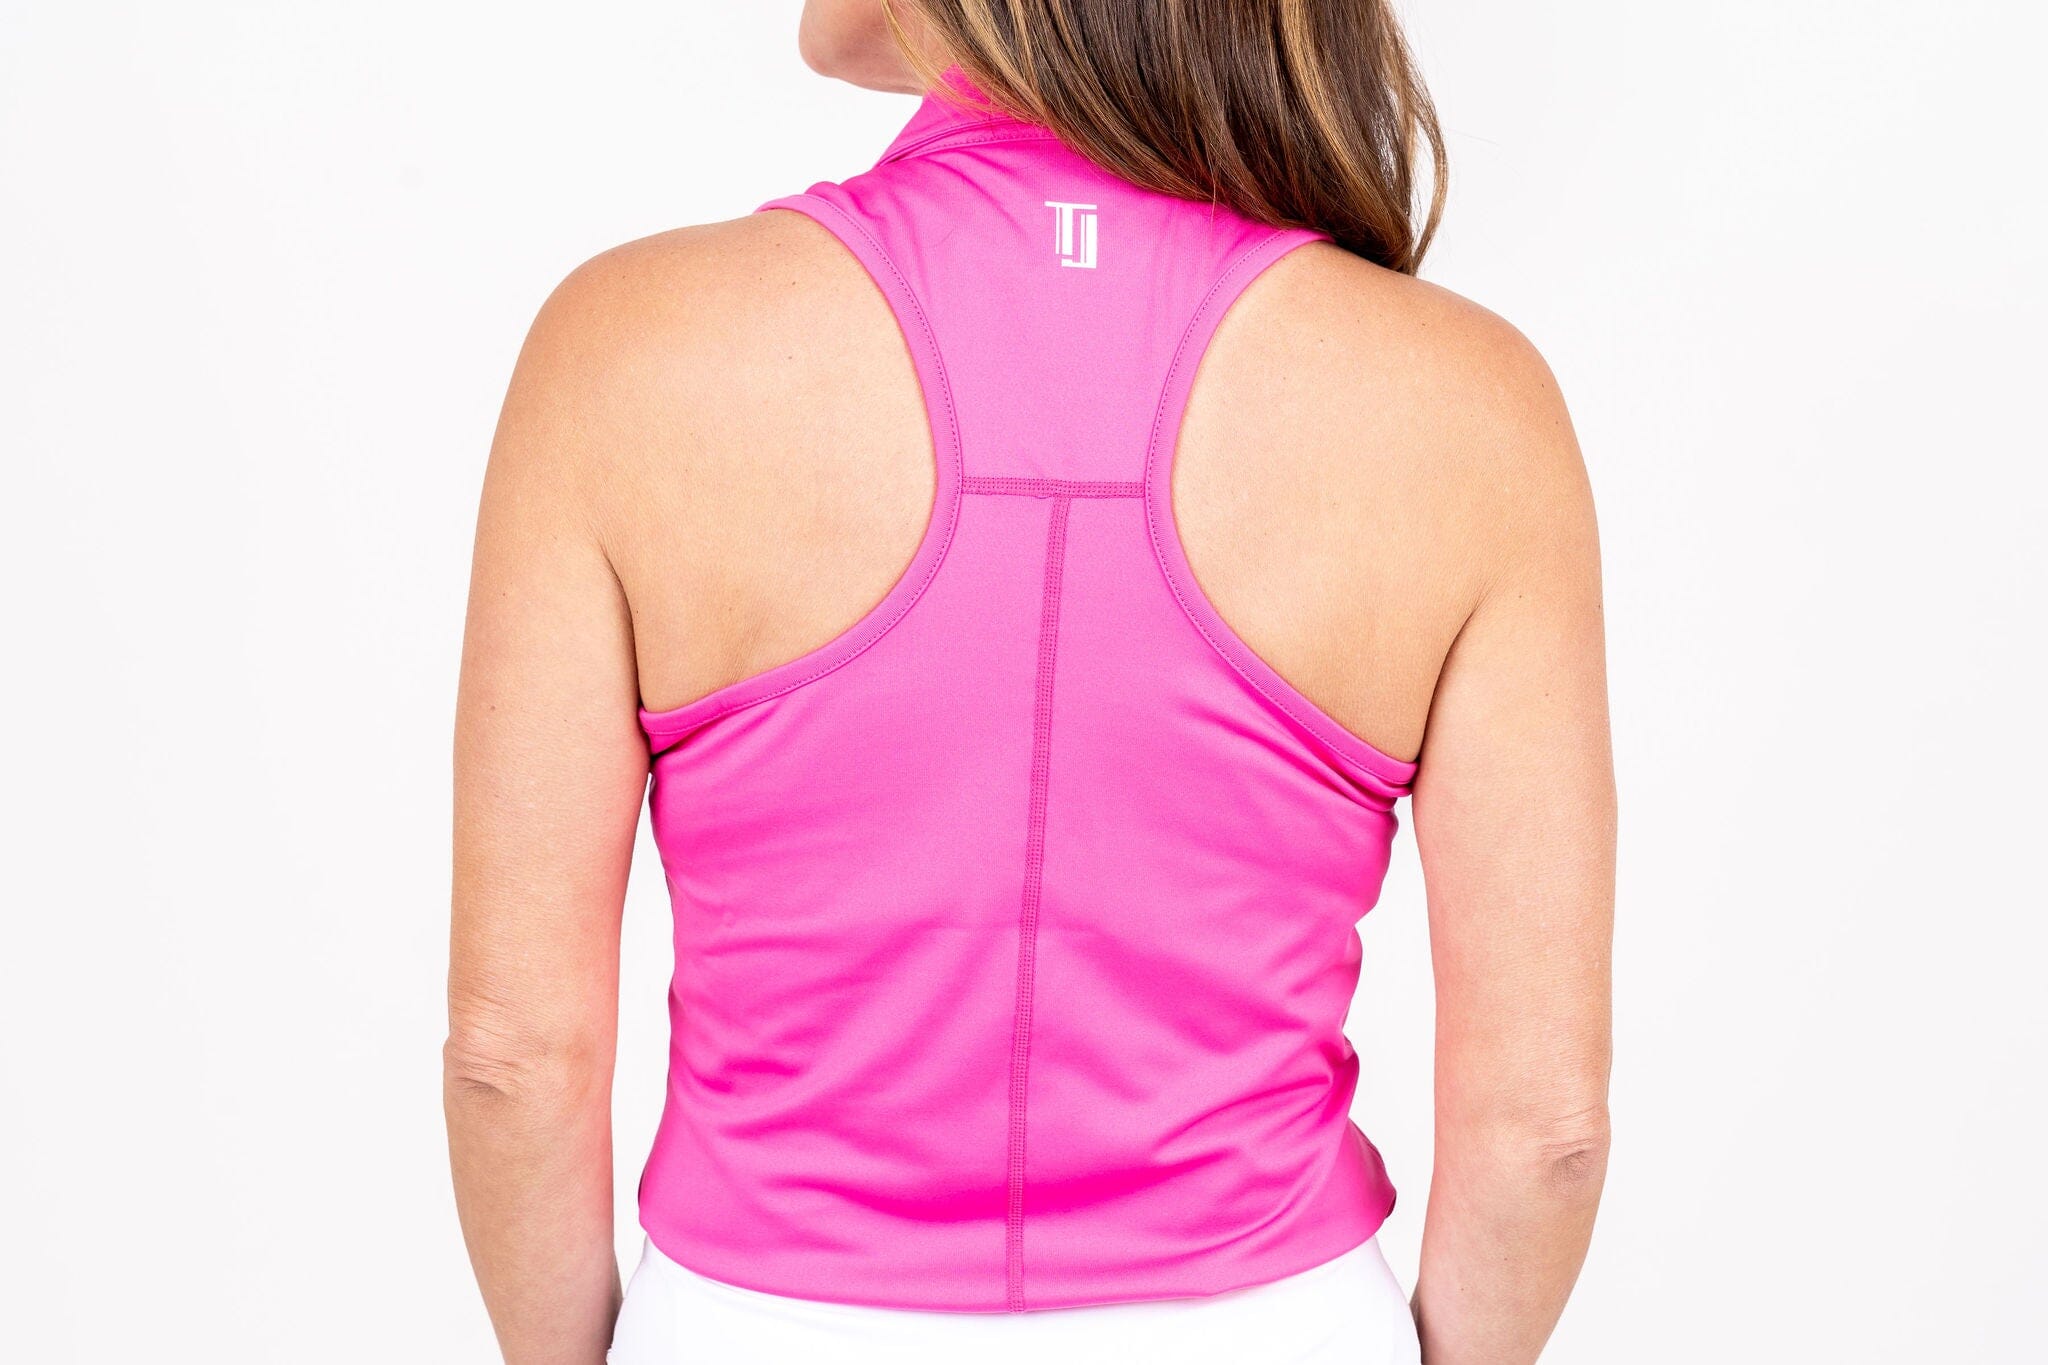 Racerback Golf Shirt - Pink Women's Golf Shirt Taylor Jordan Apparel 